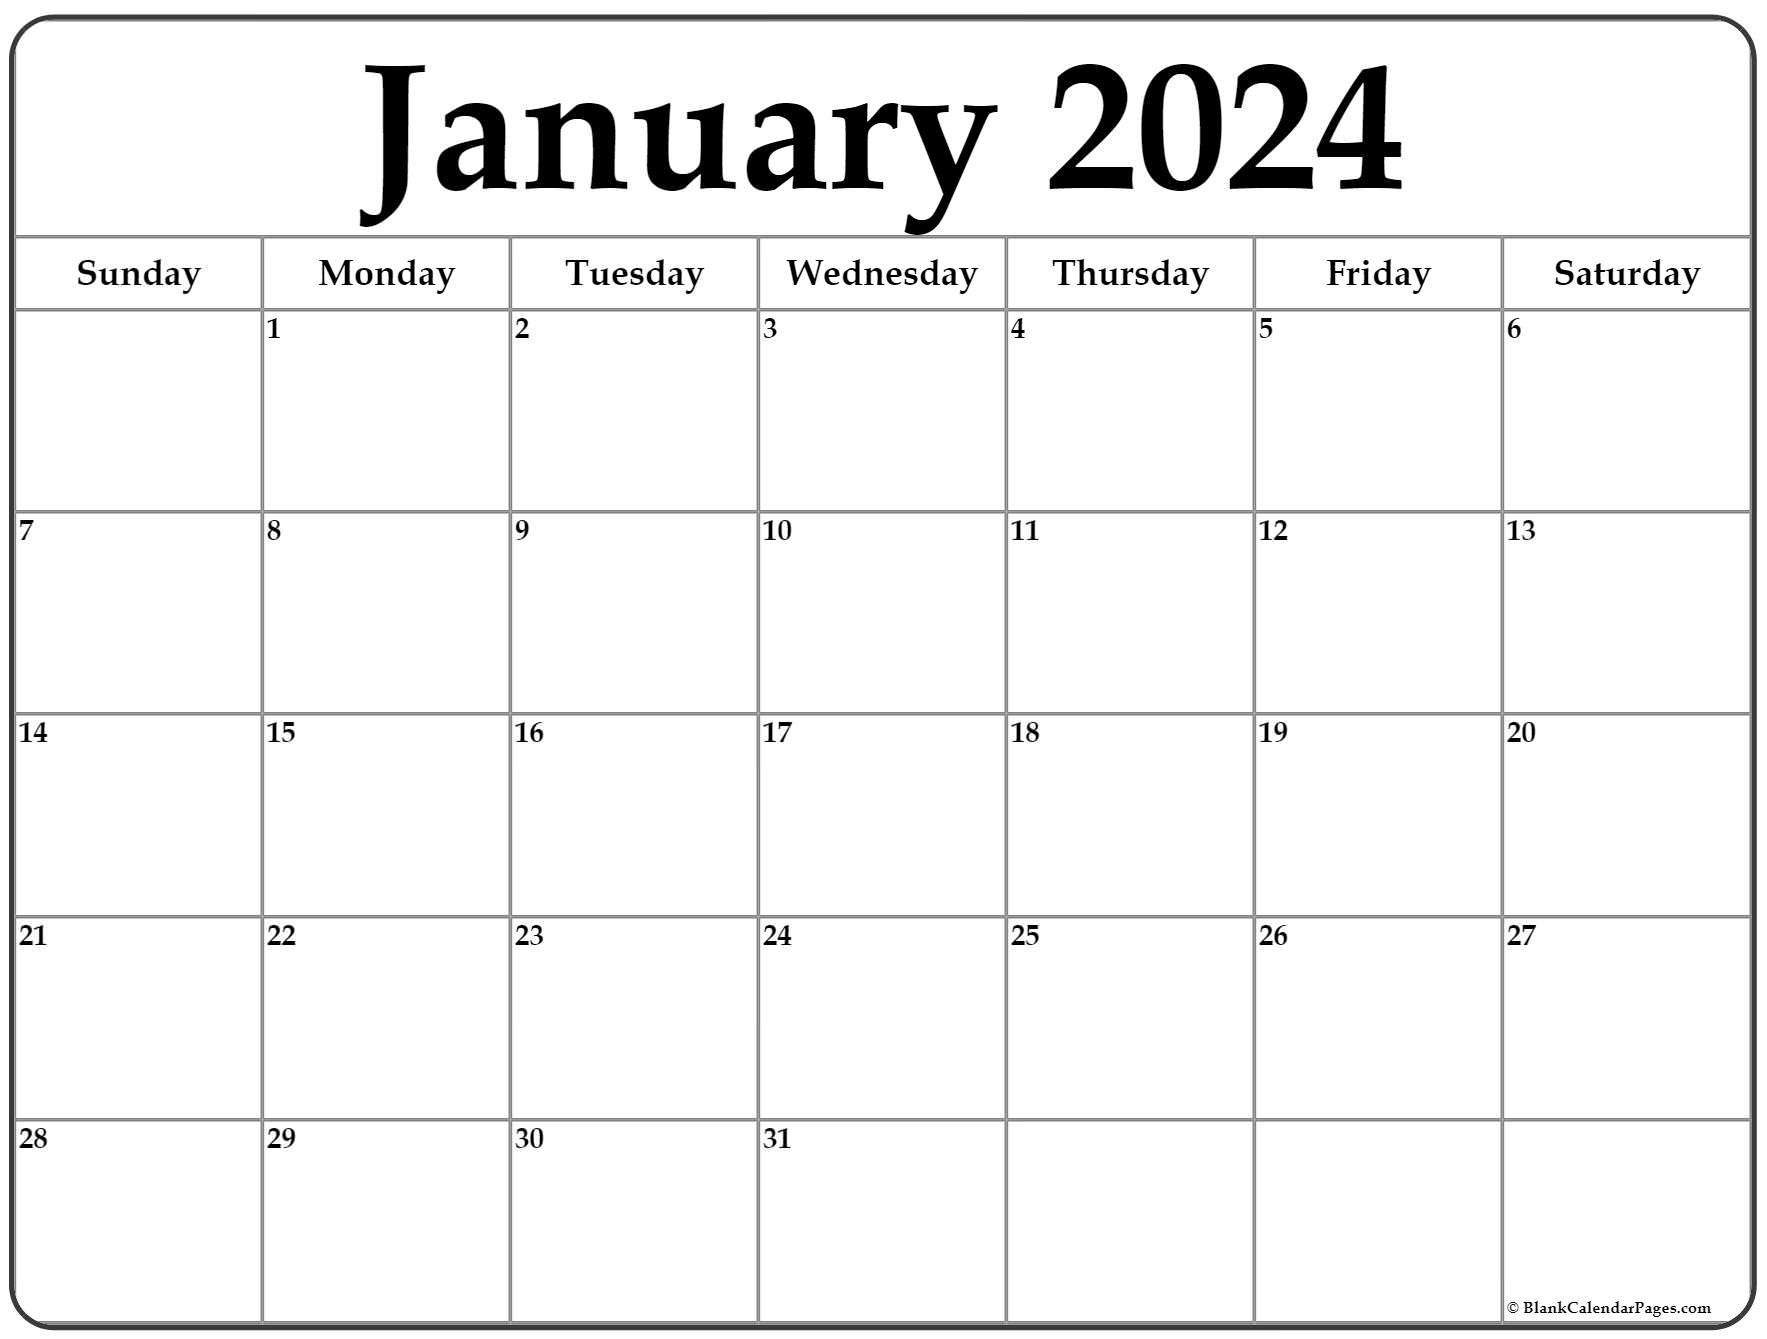 January 2024 Calendar | Free Printable Calendar | Blank Calendar Printable 2024